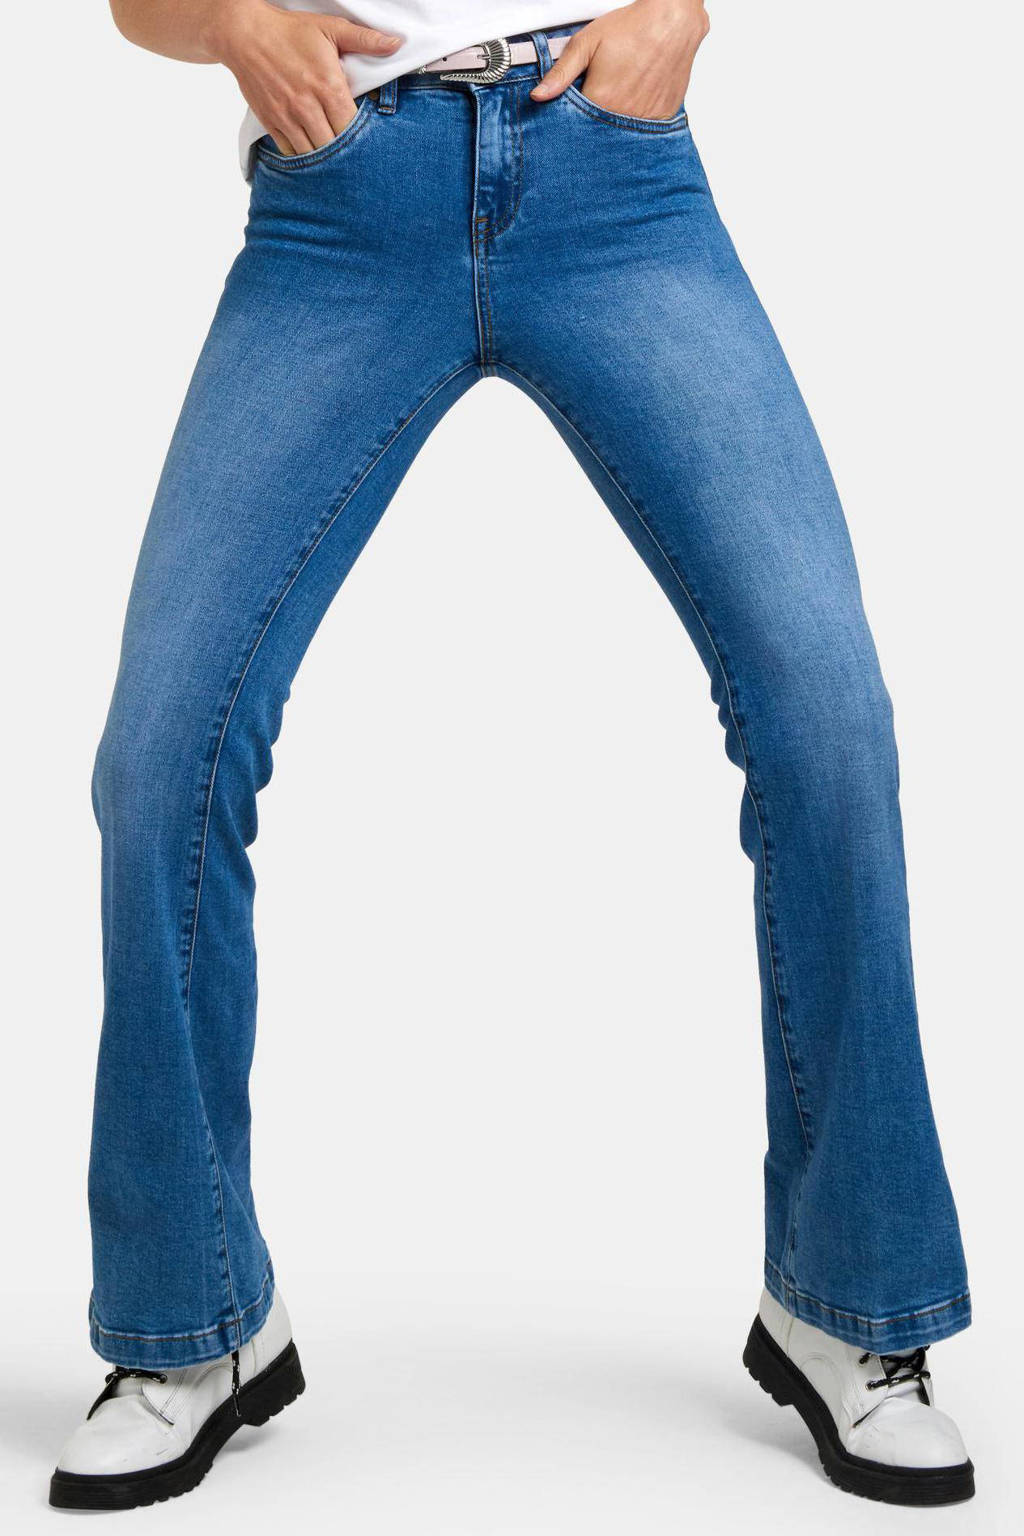 Blauwe dames Shoeby Eksept flared jeans Susan L33 stonewashed van stretchdenim met regular waist en rits- en knoopsluiting